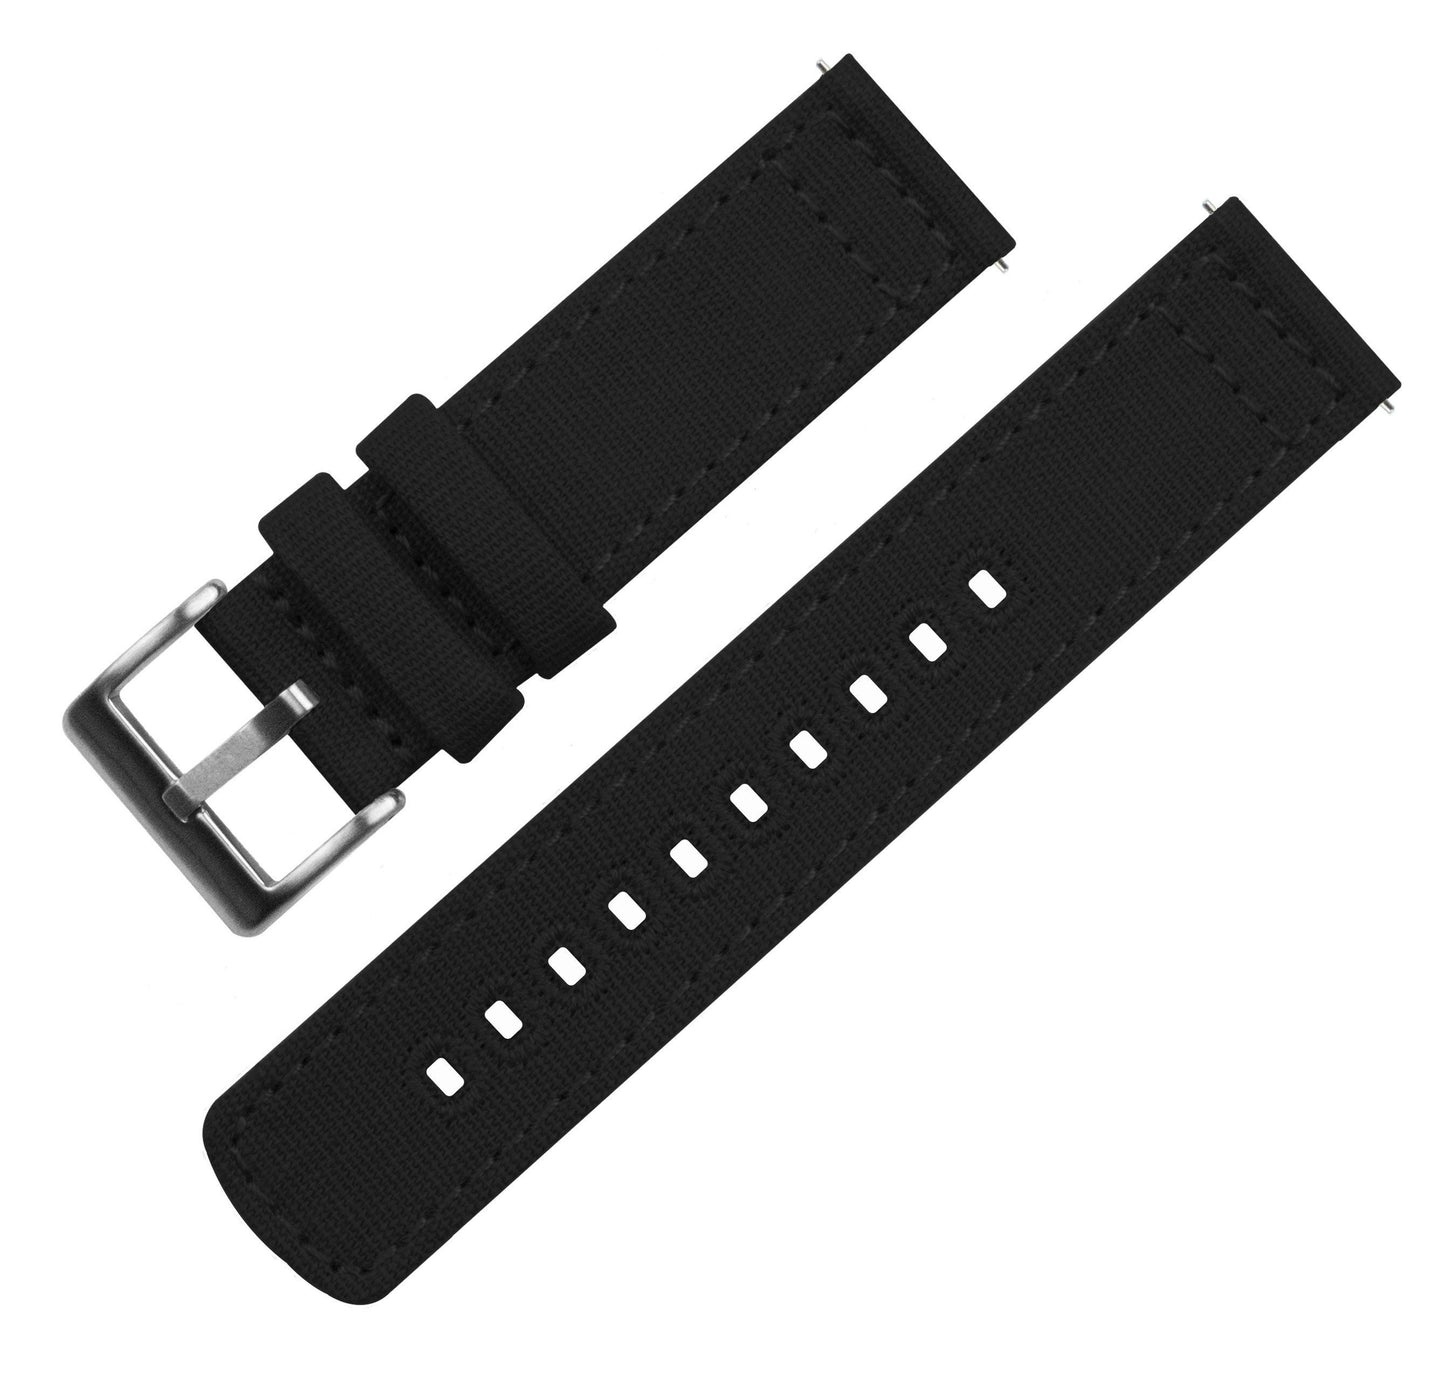 Pebble Smart Watches | Black Canvas - Barton Watch Bands